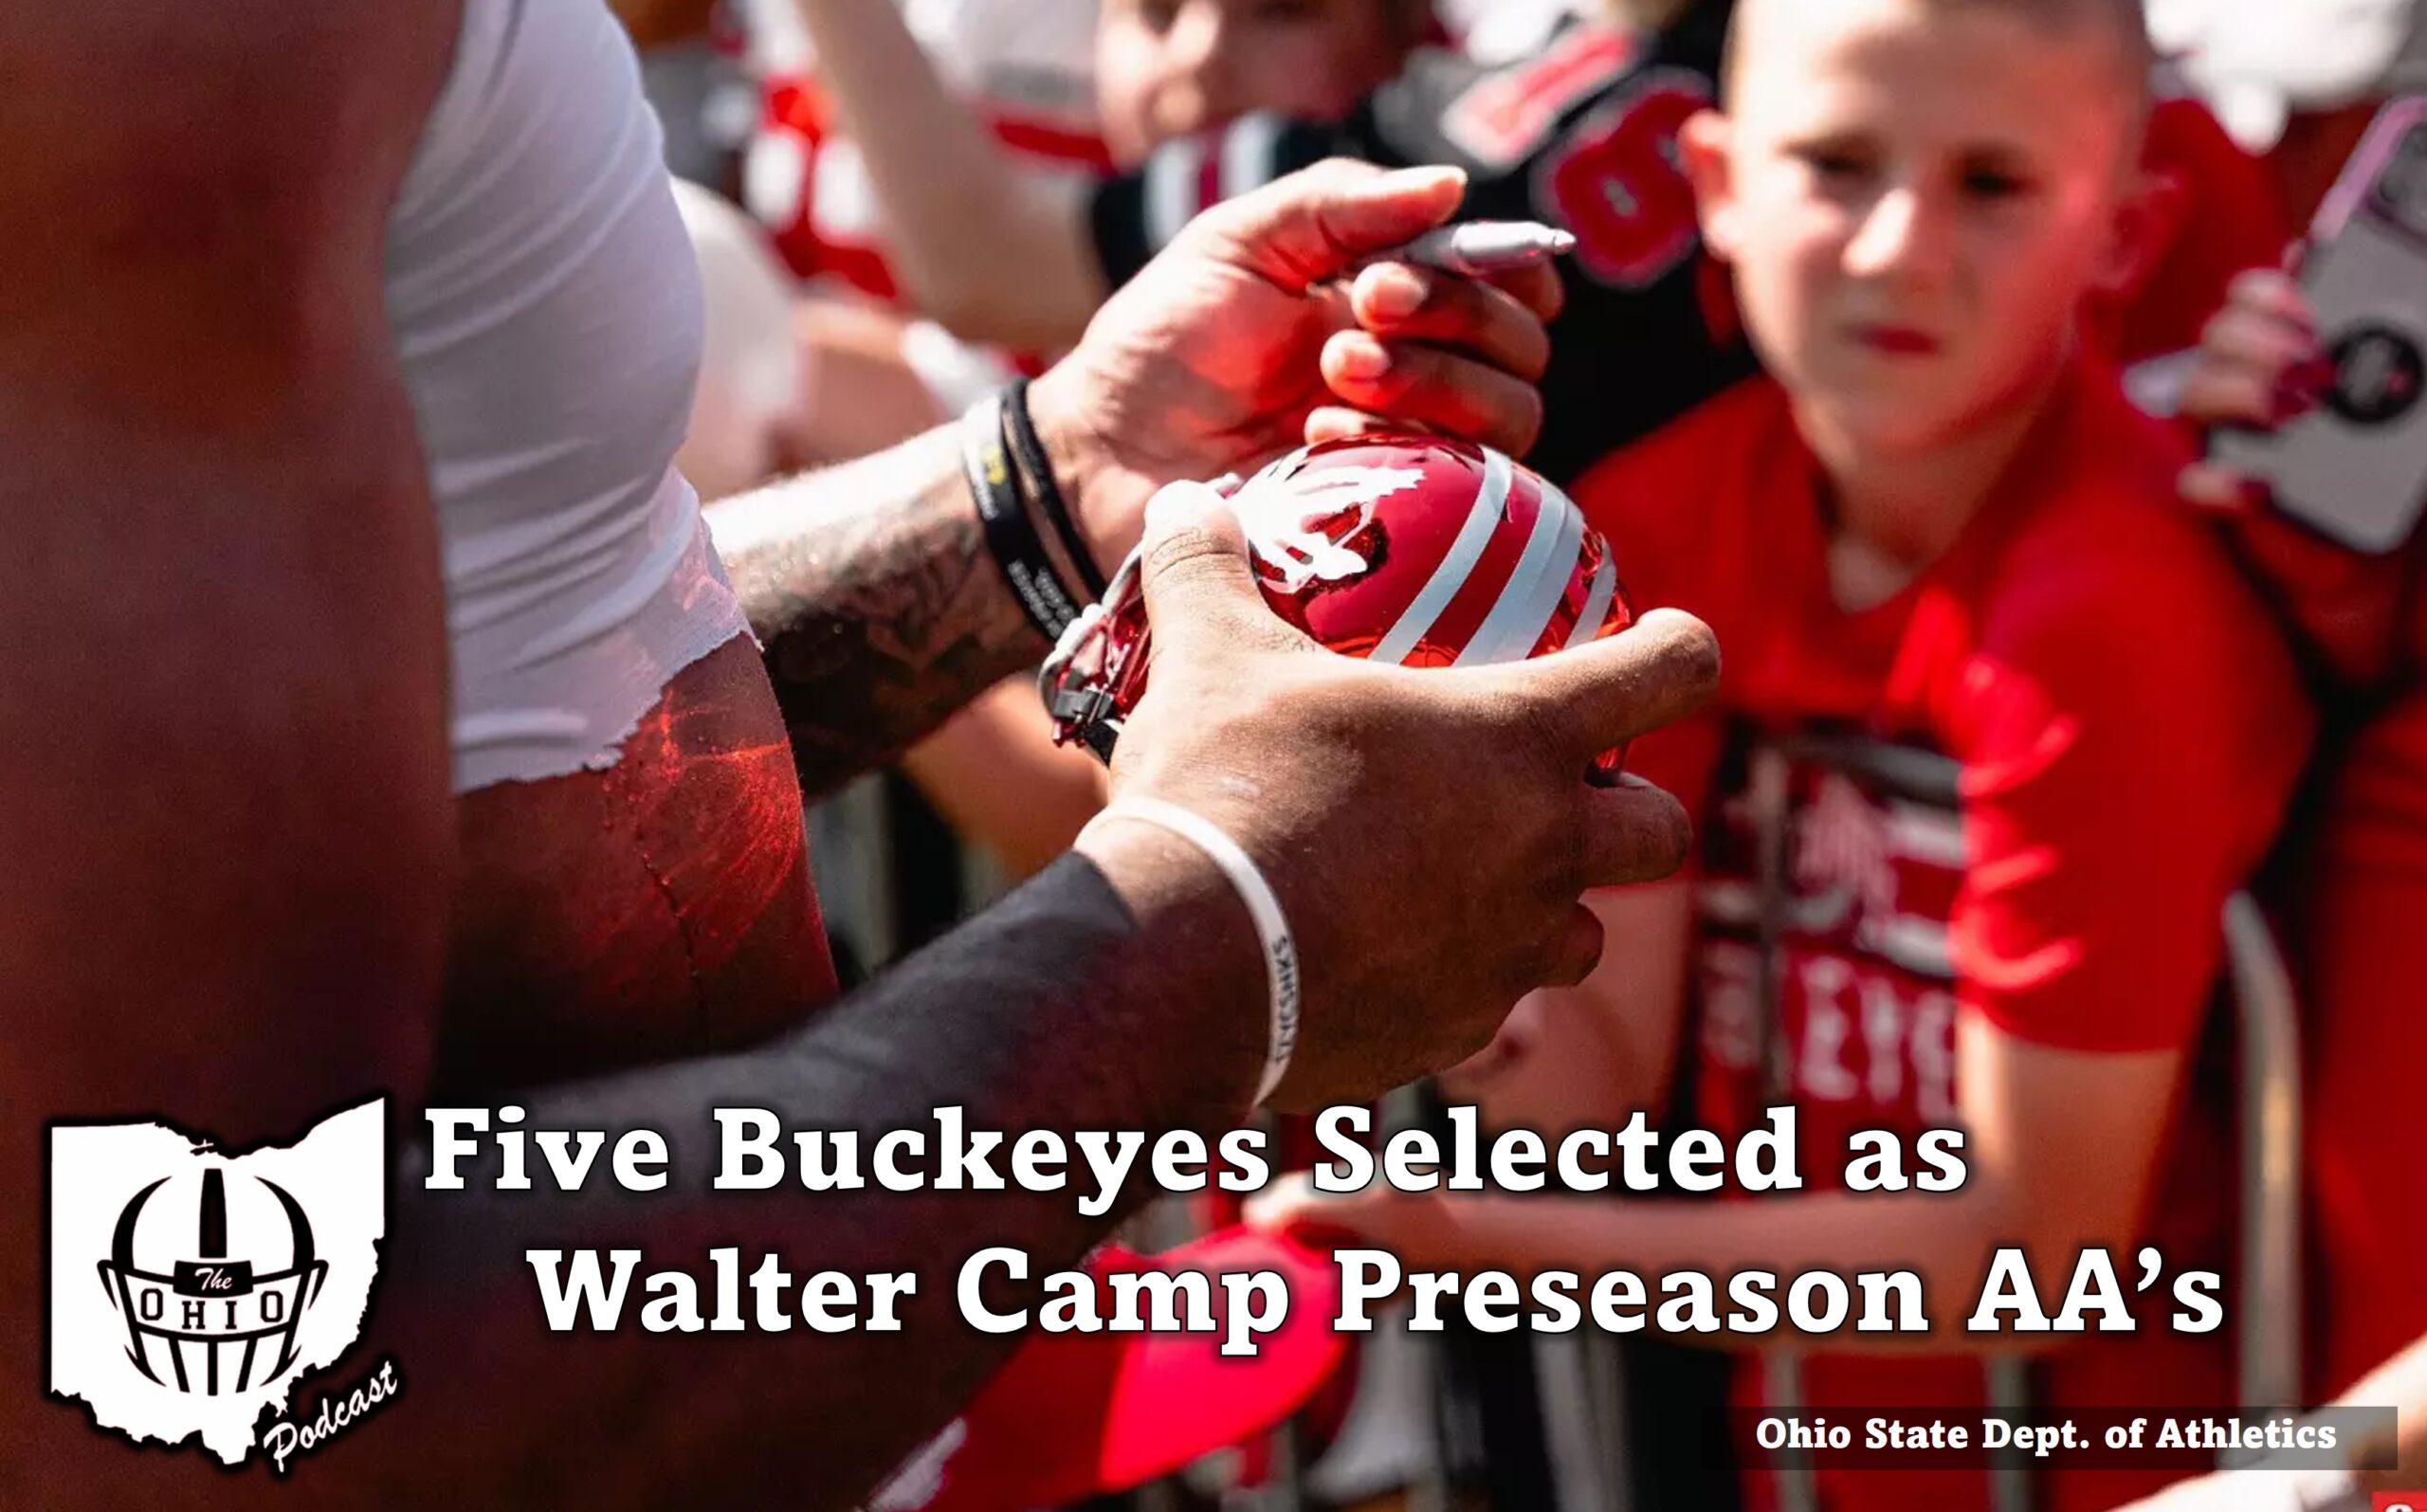 Five Buckeyes Selected as Walter Camp Preseason All Americans